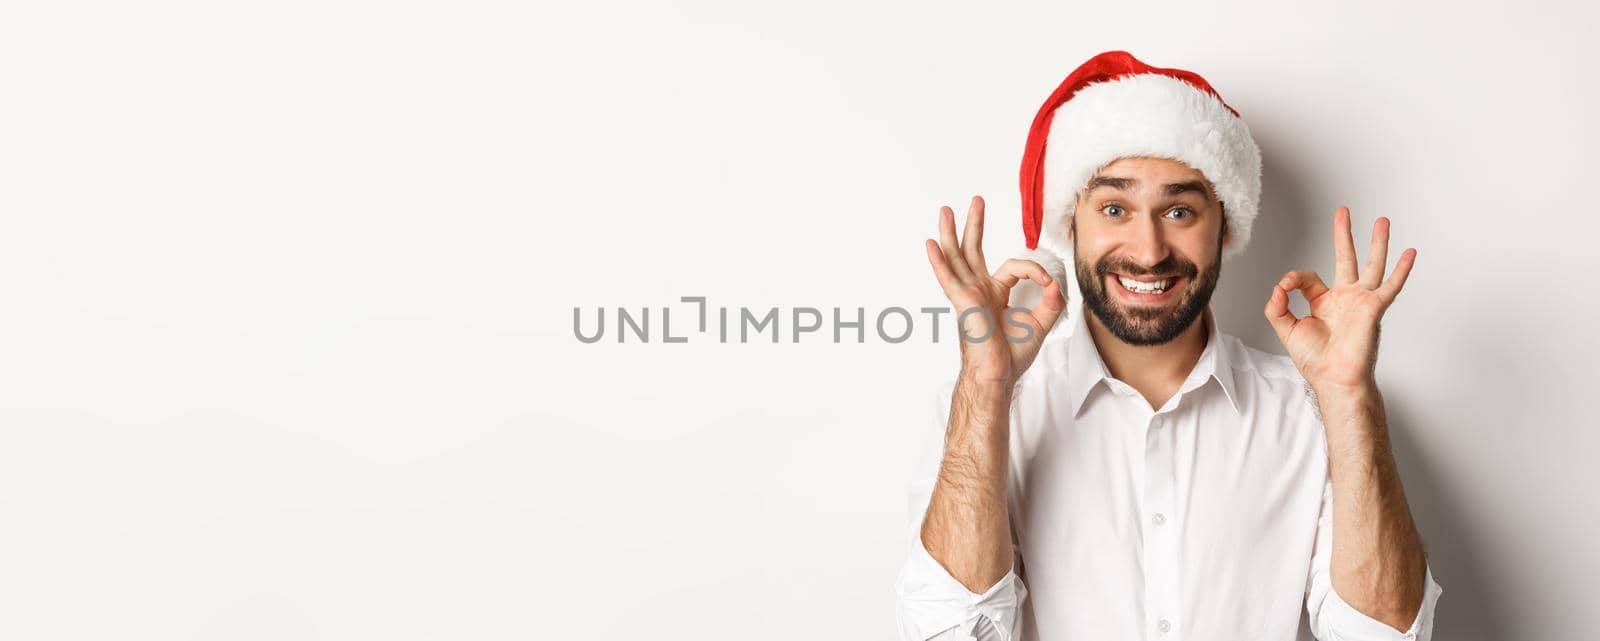 Party, winter holidays and celebration concept. Joyful man enjoying christmas and showing okay sign, smiling satisfied, wearing santa hat, white background.